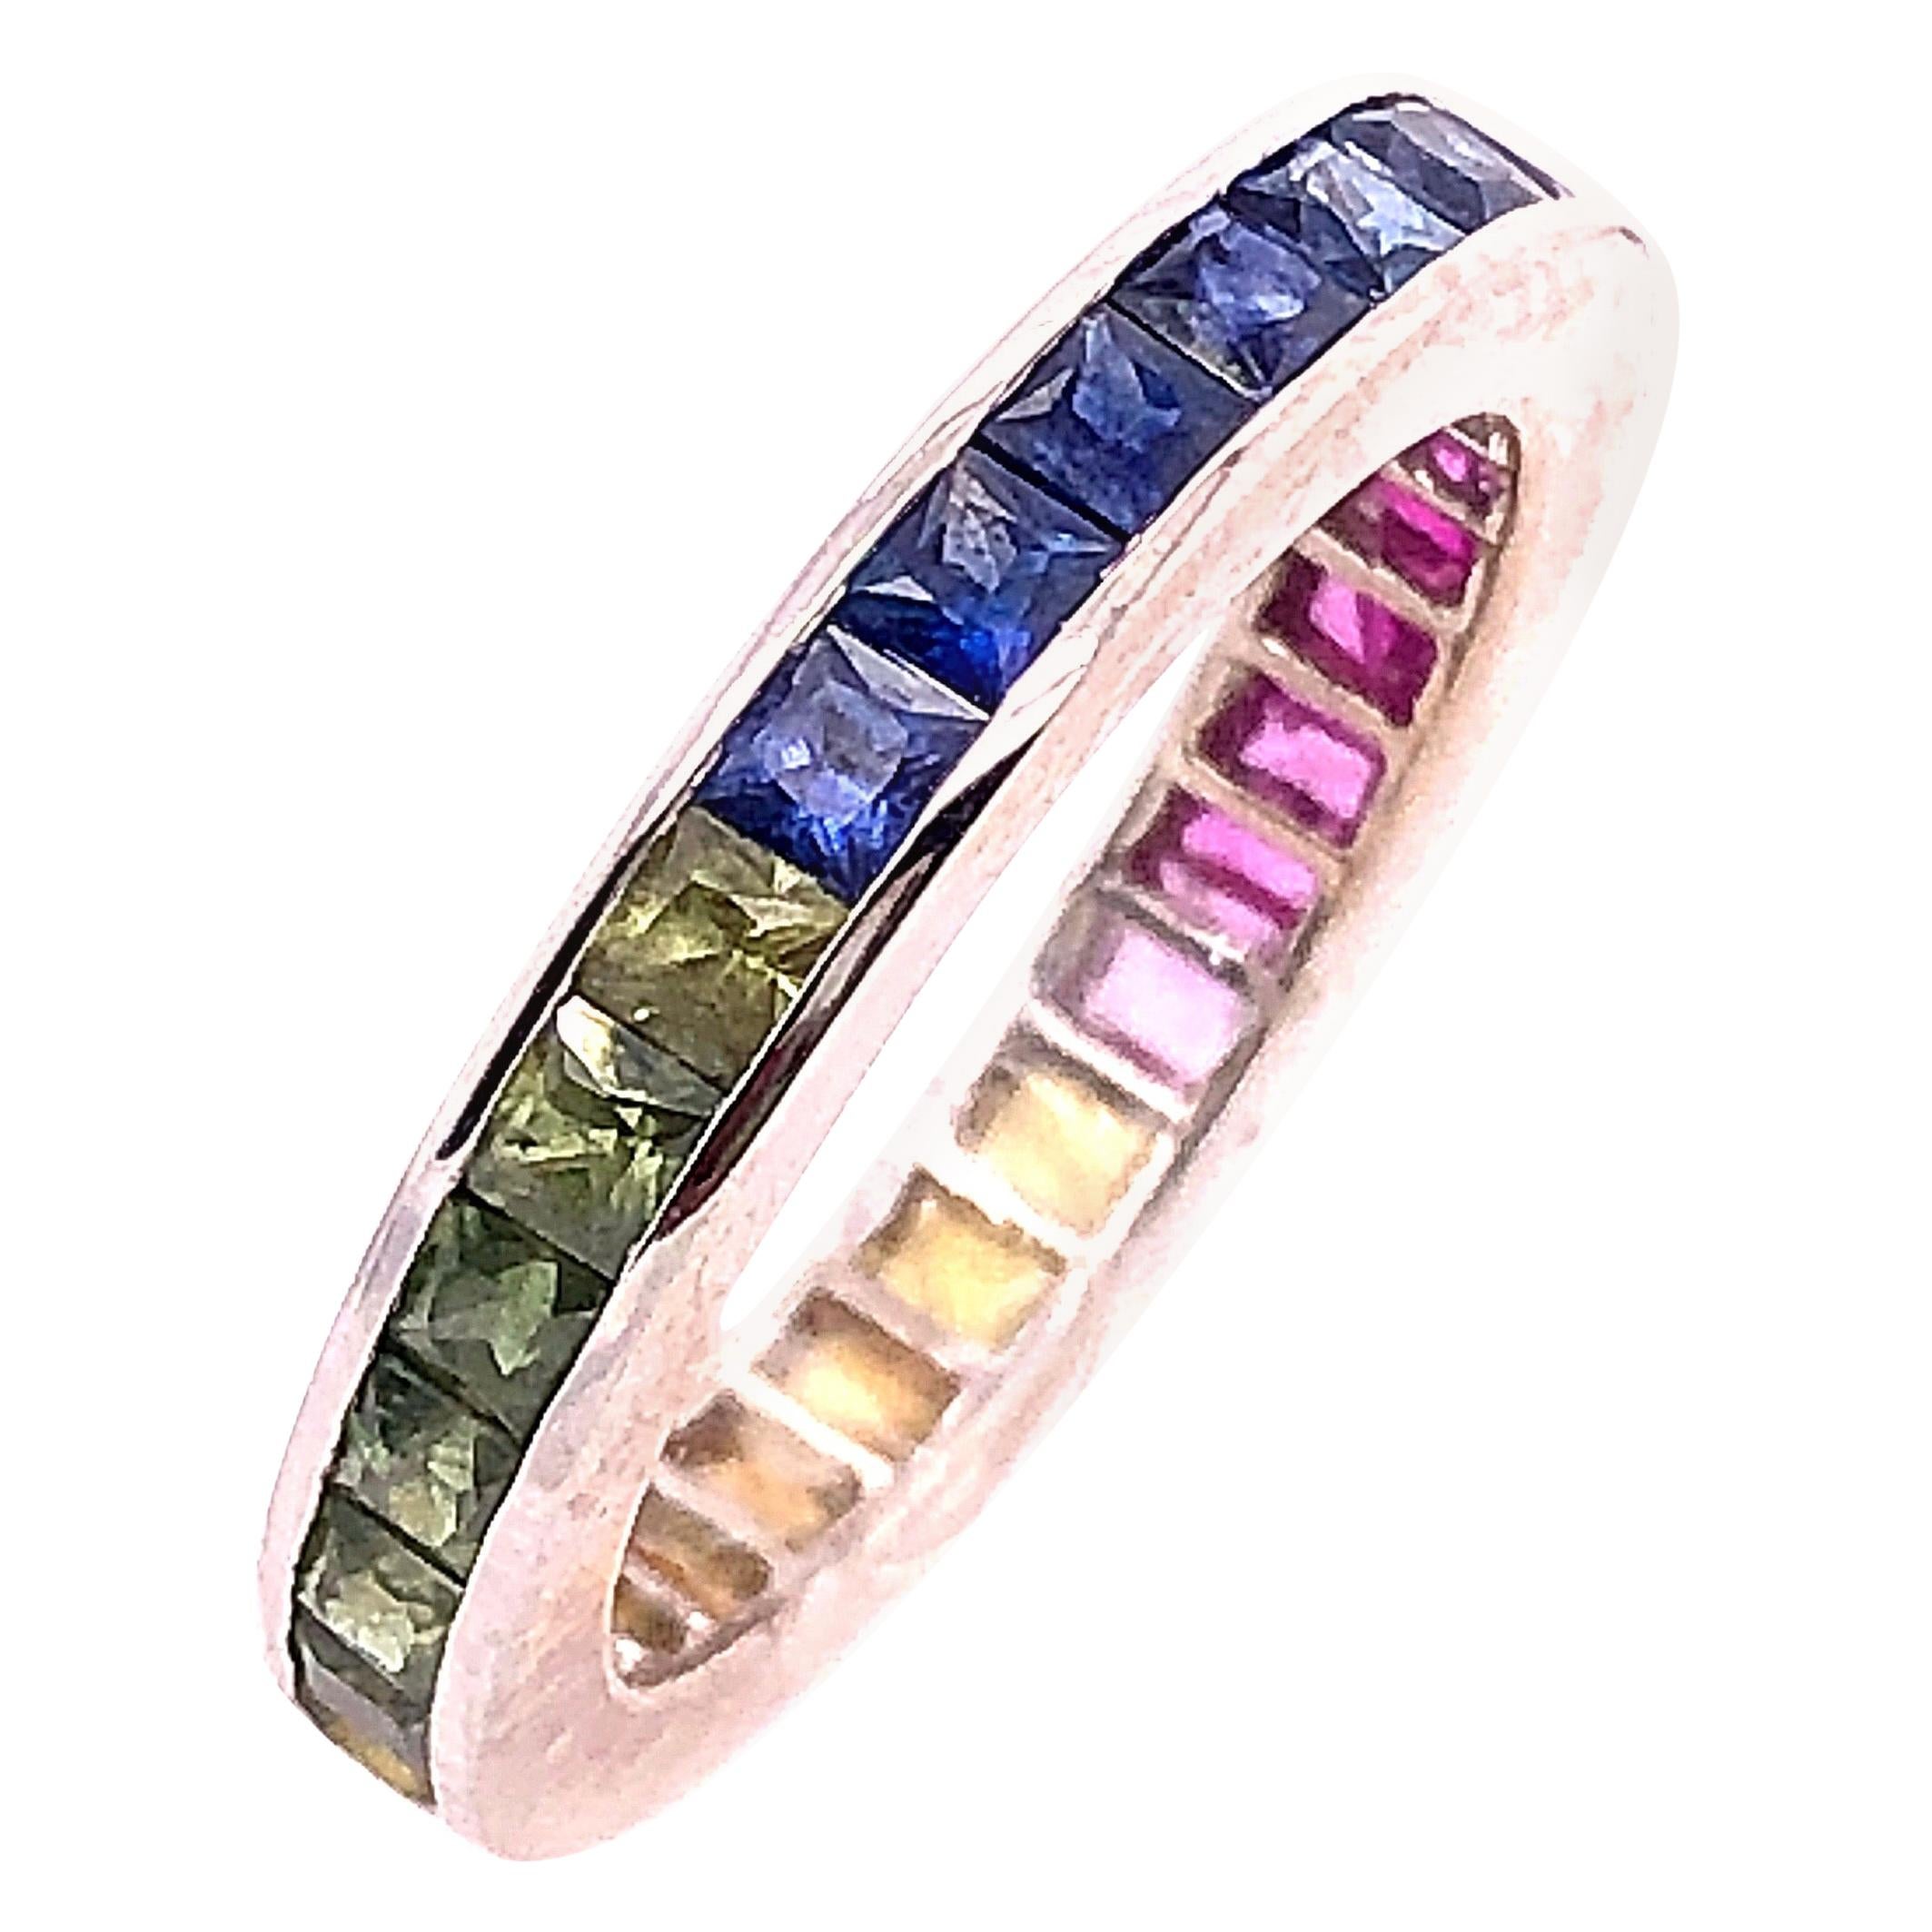 18 Karat White Gold Band / Ring with Multicolored Semi Precious Stones